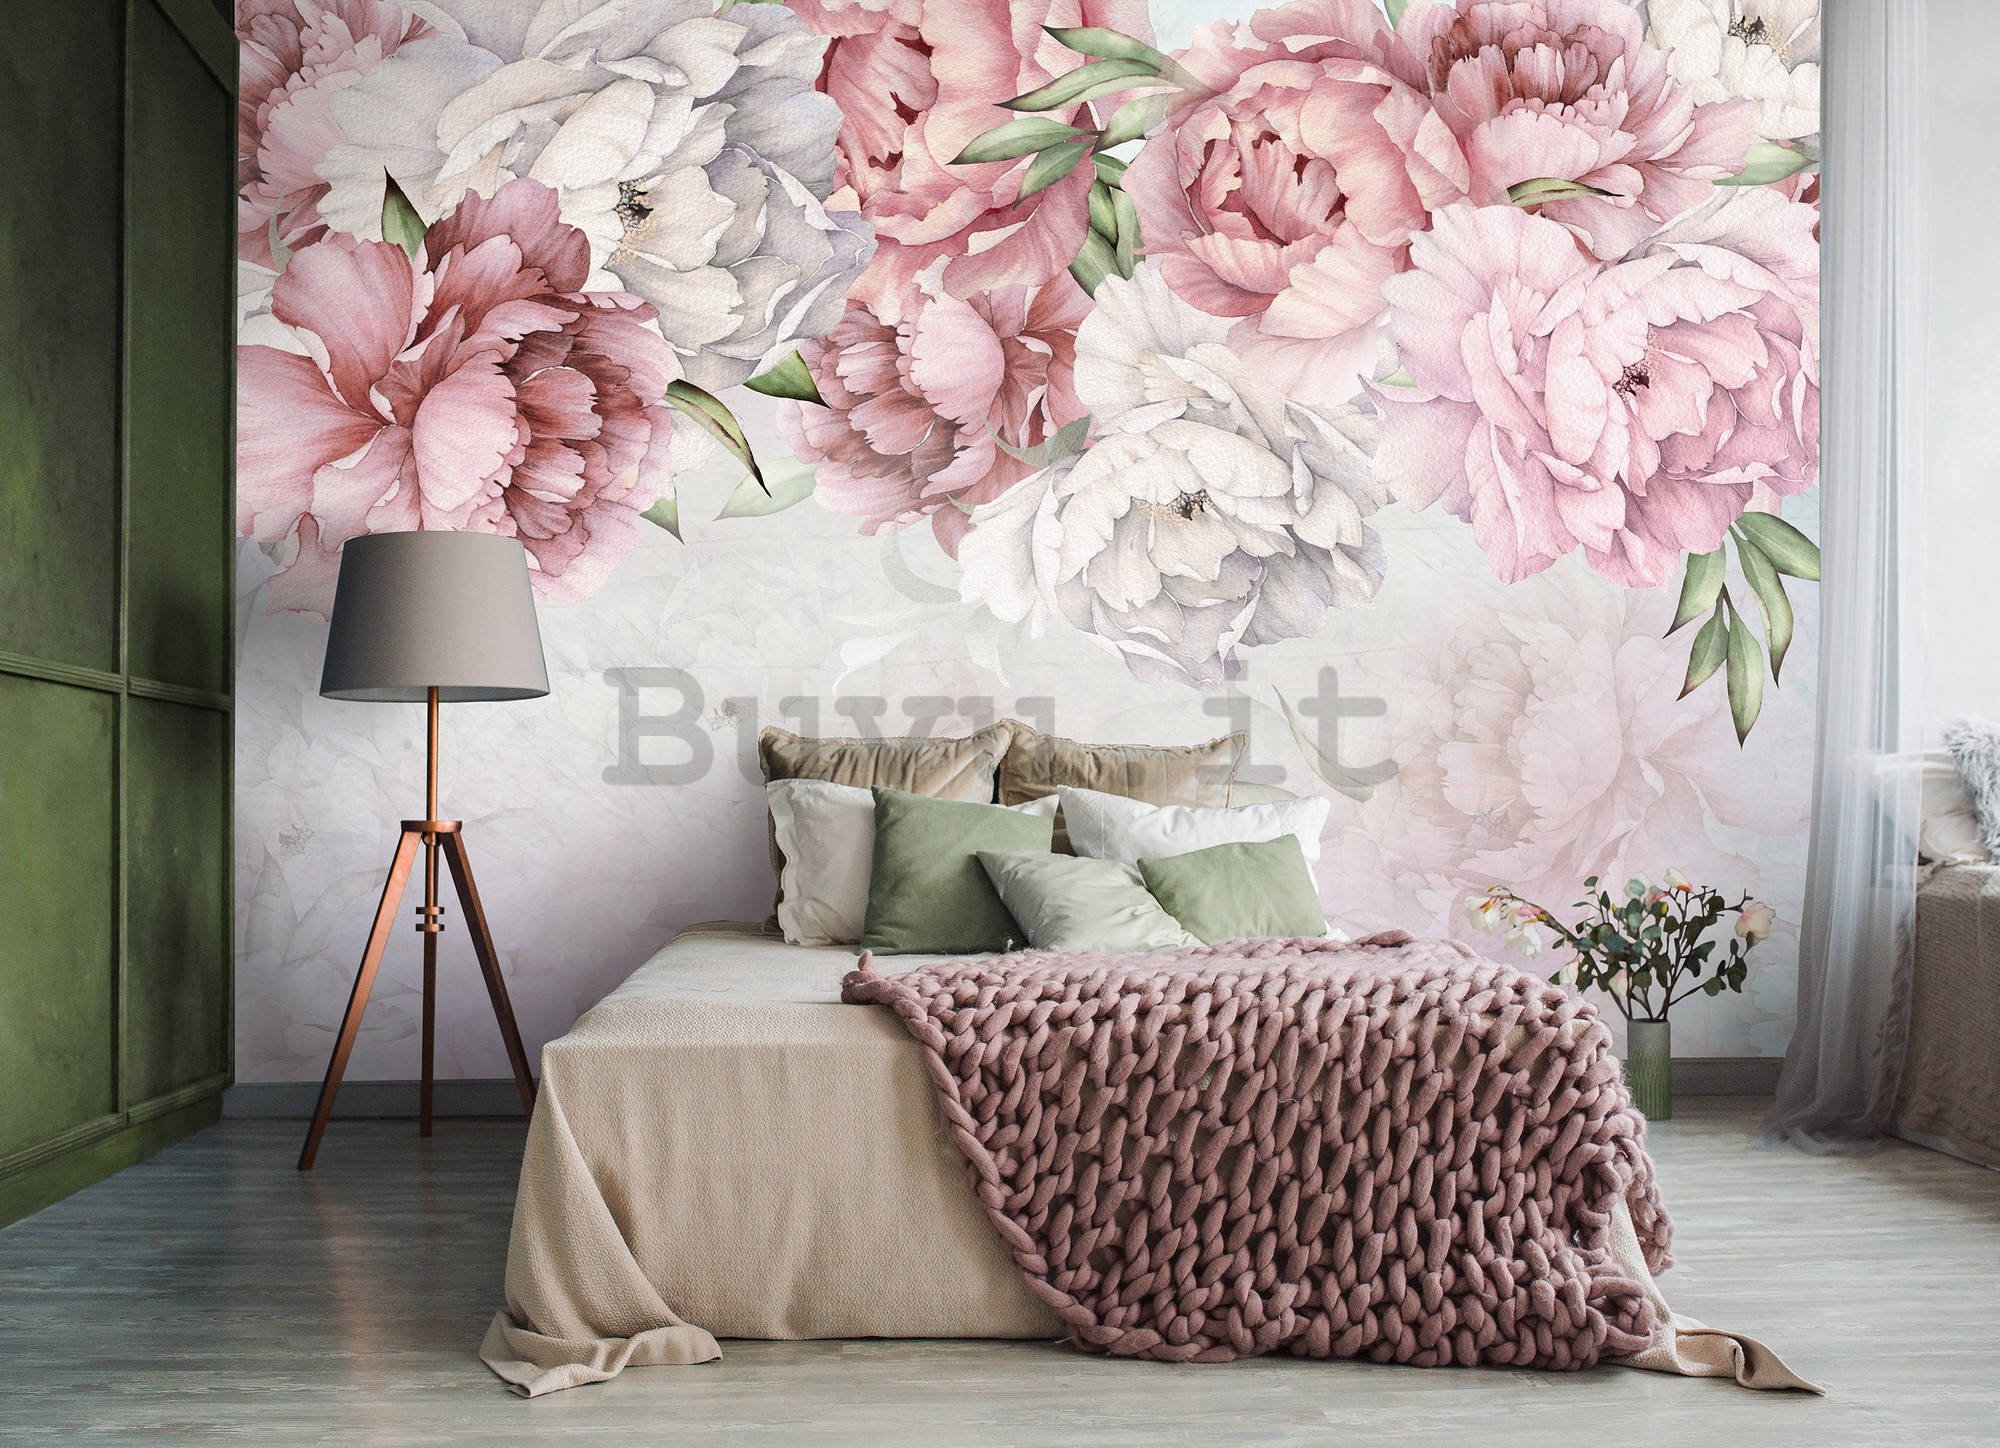 Fotomurale in TNT: Rose bianche e rosa - 254x184 cm